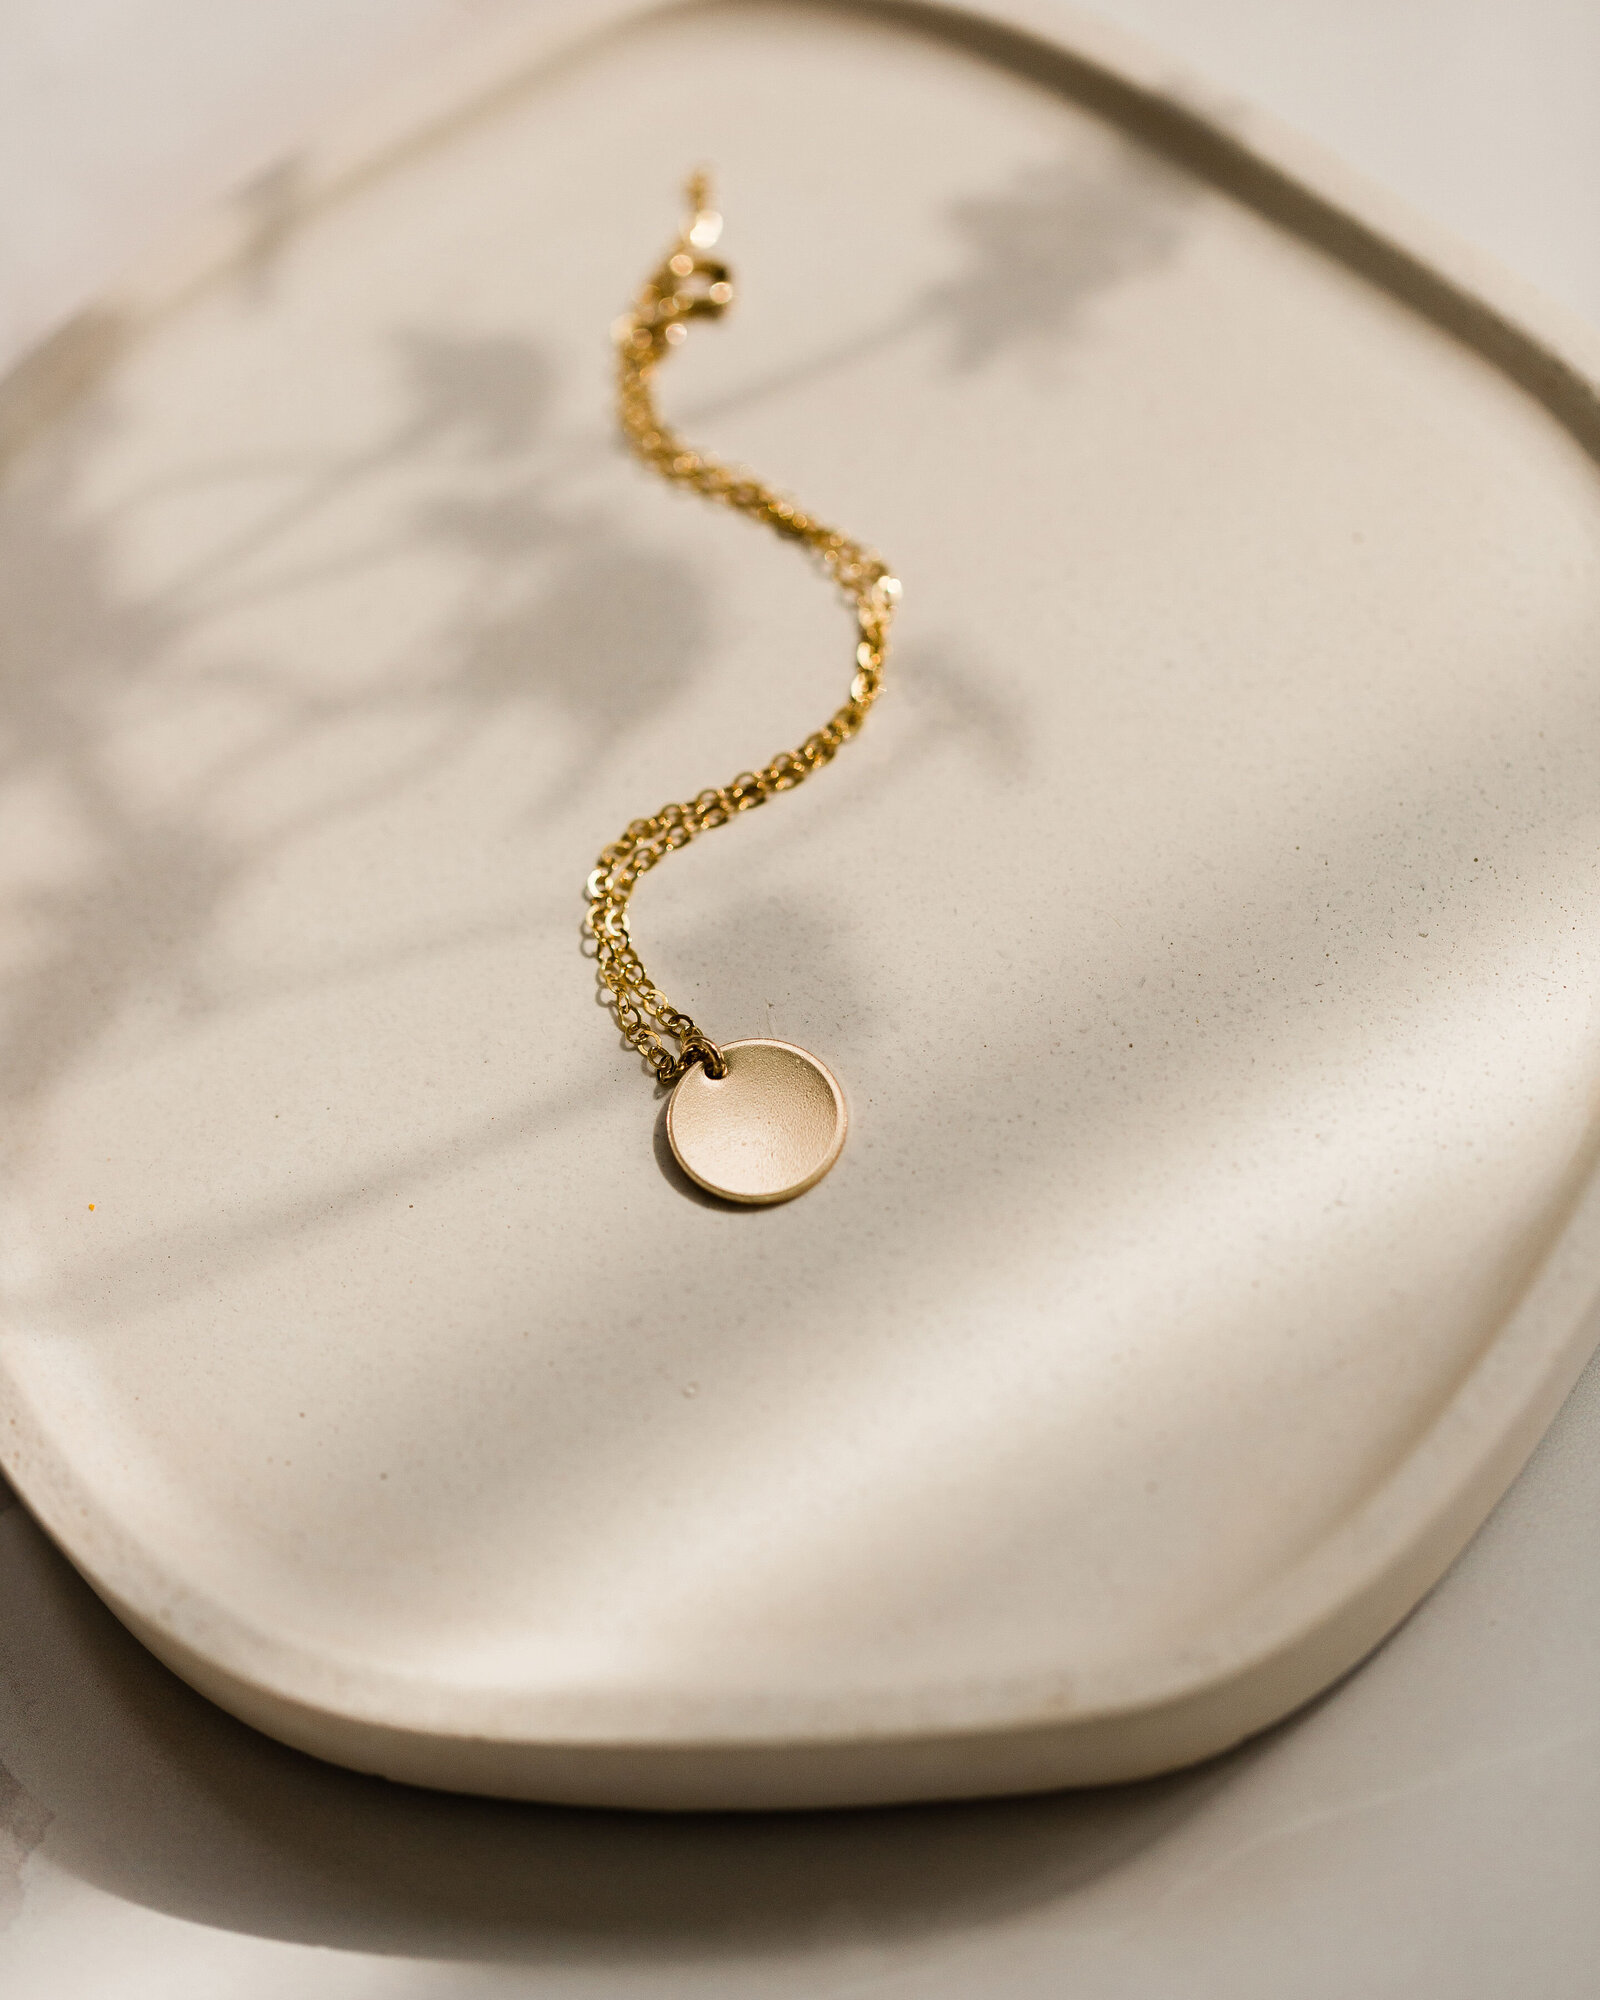 Feminine jewelry product photography necklace with shadows boho